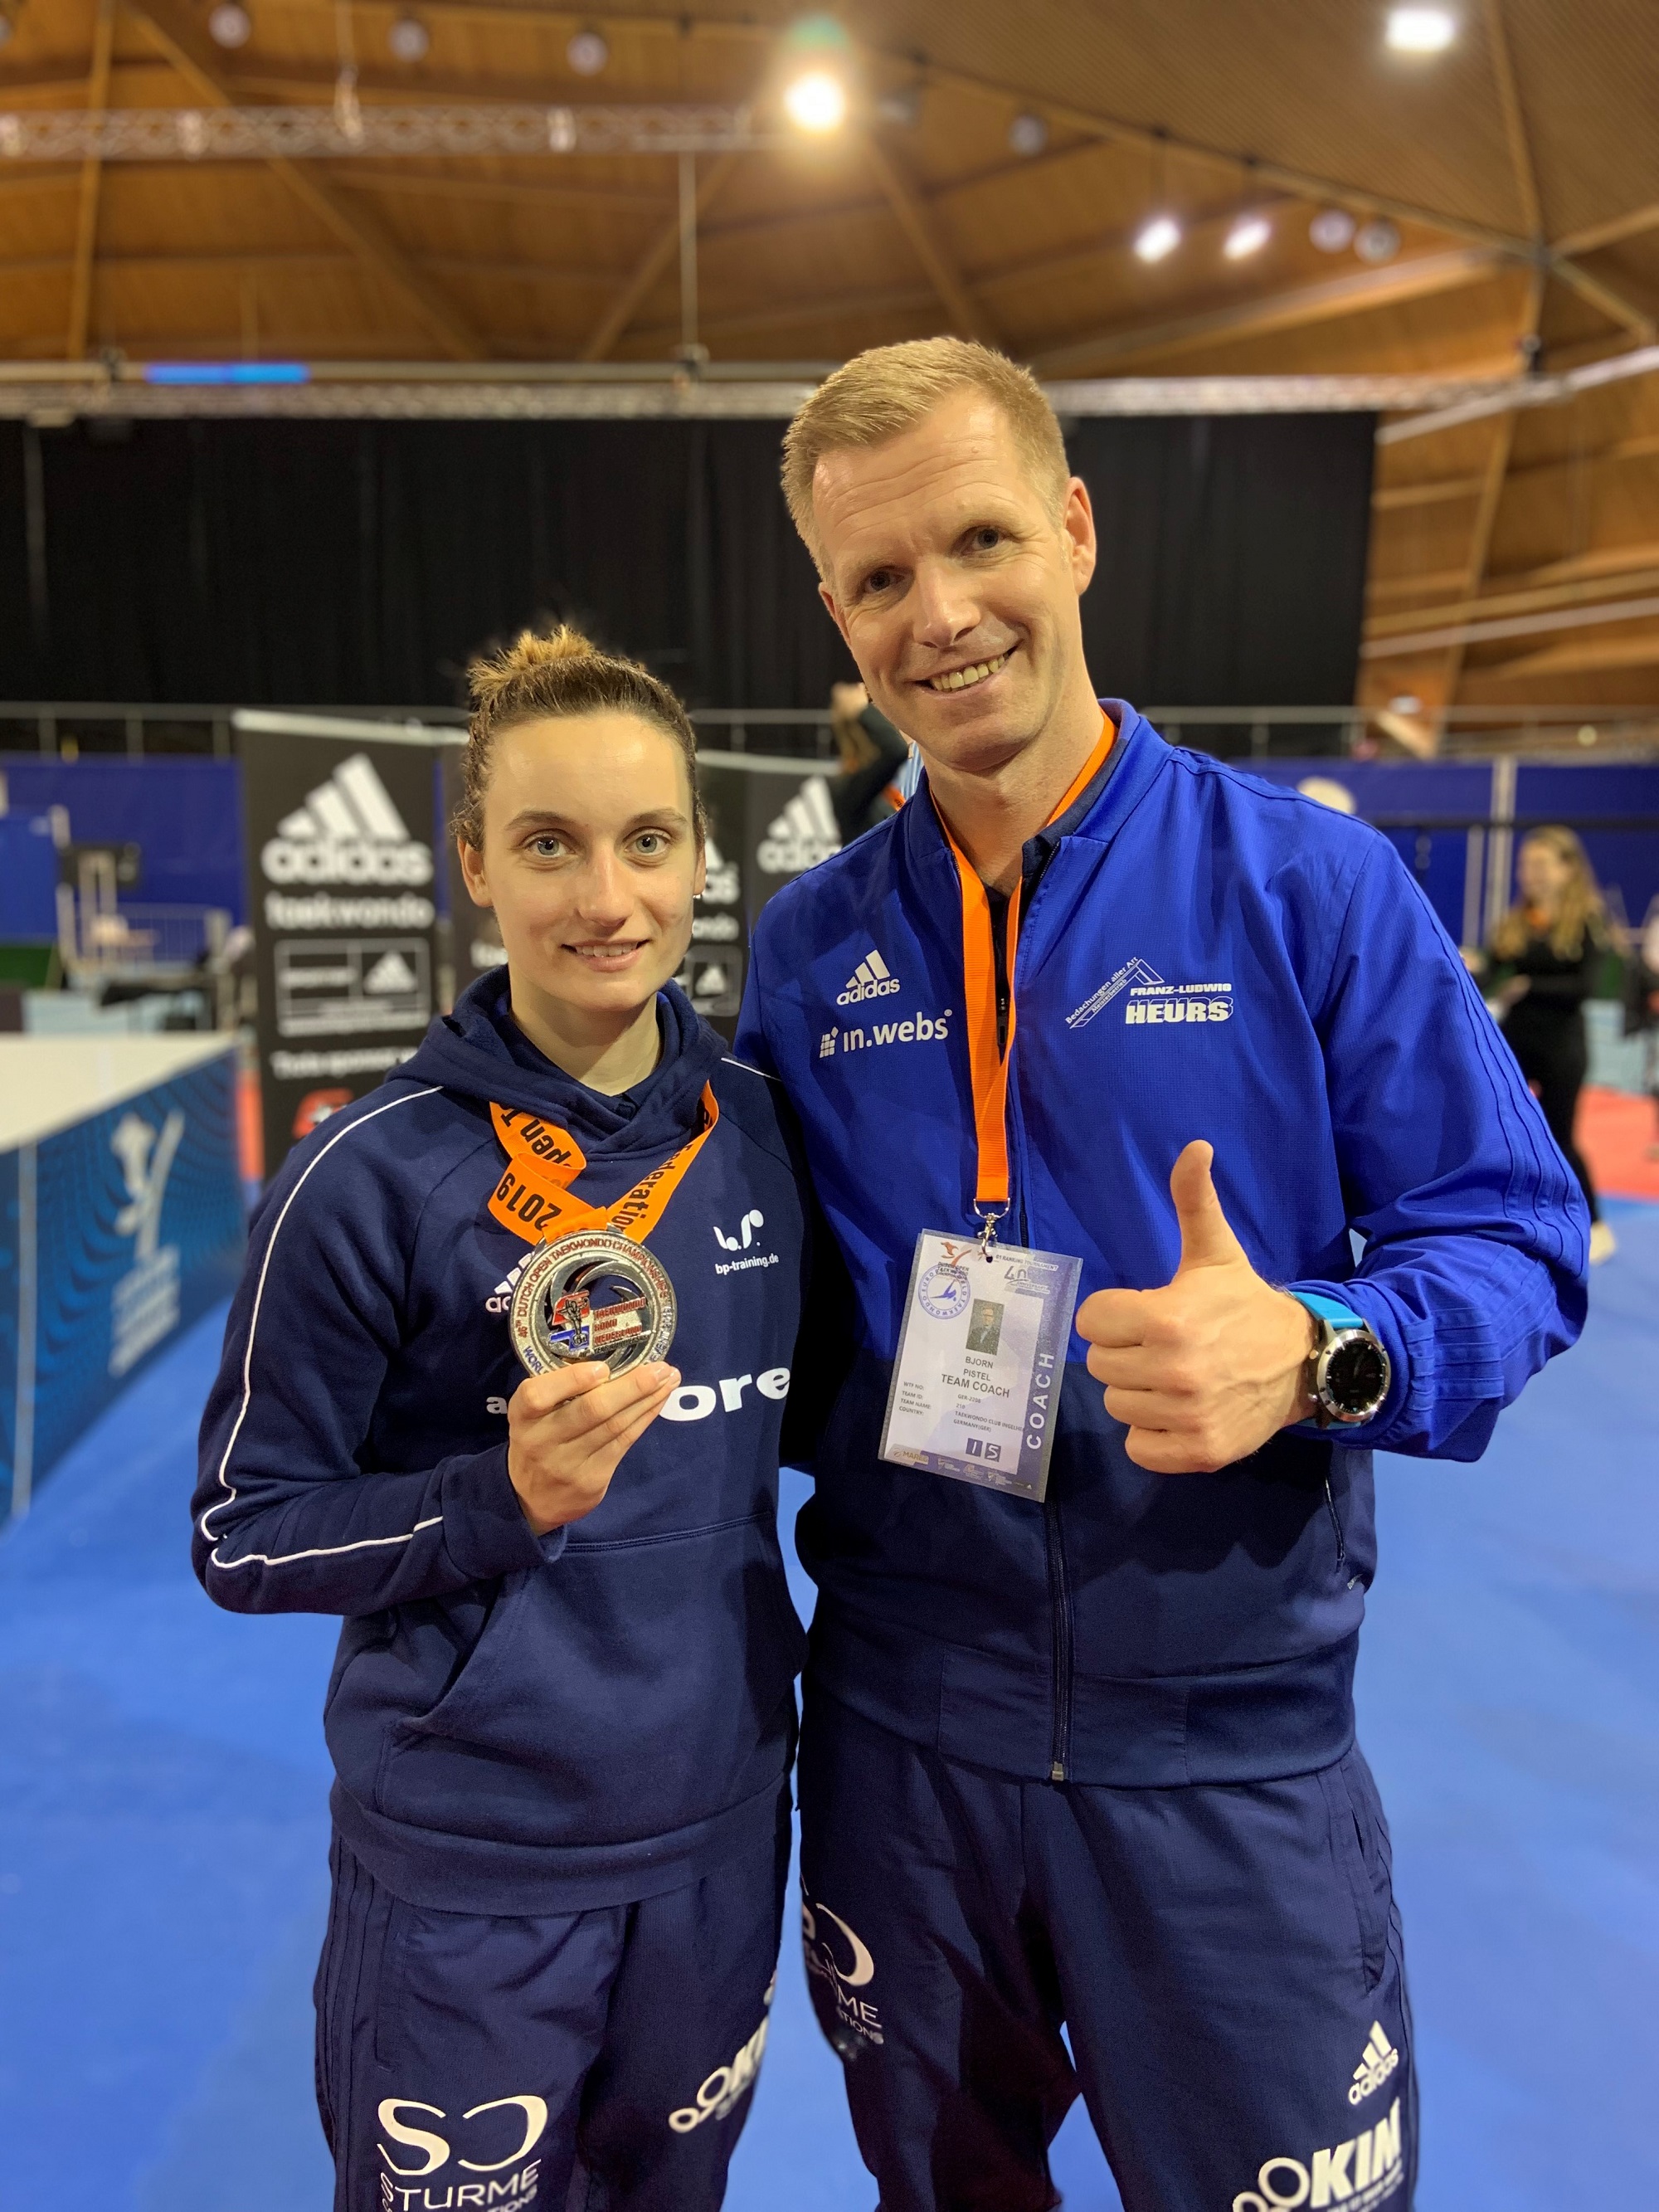 Silbermedaille für Madeline Folgmann bei den Dutch Open